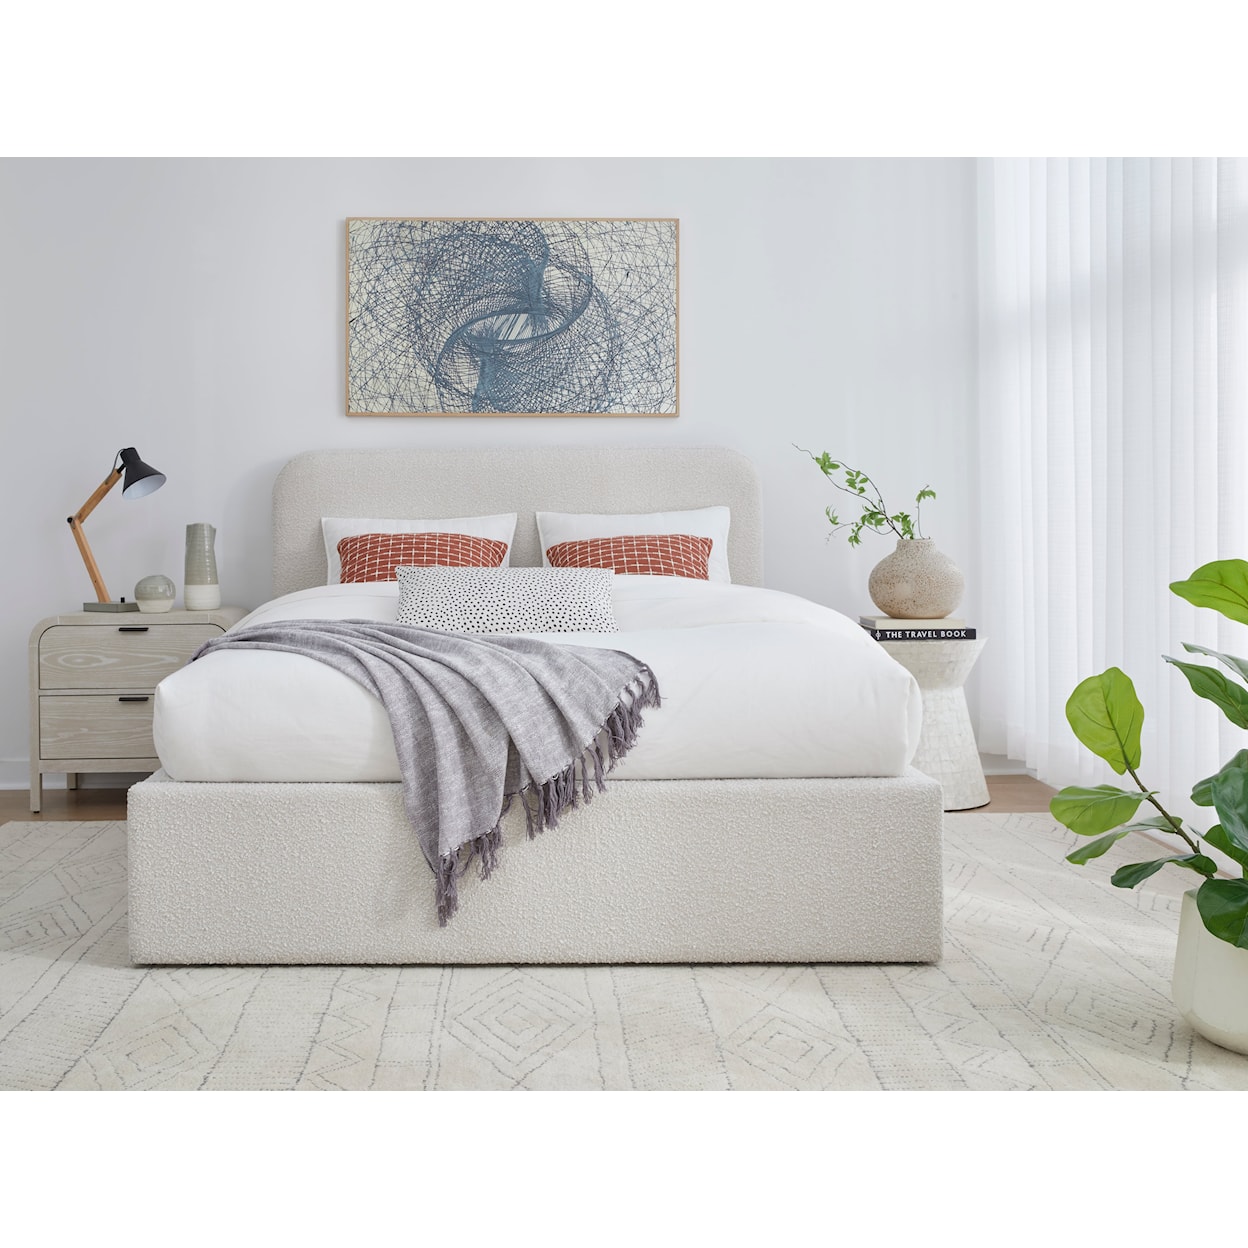 Modus International Off-White Queen Upholstered Platform Bed